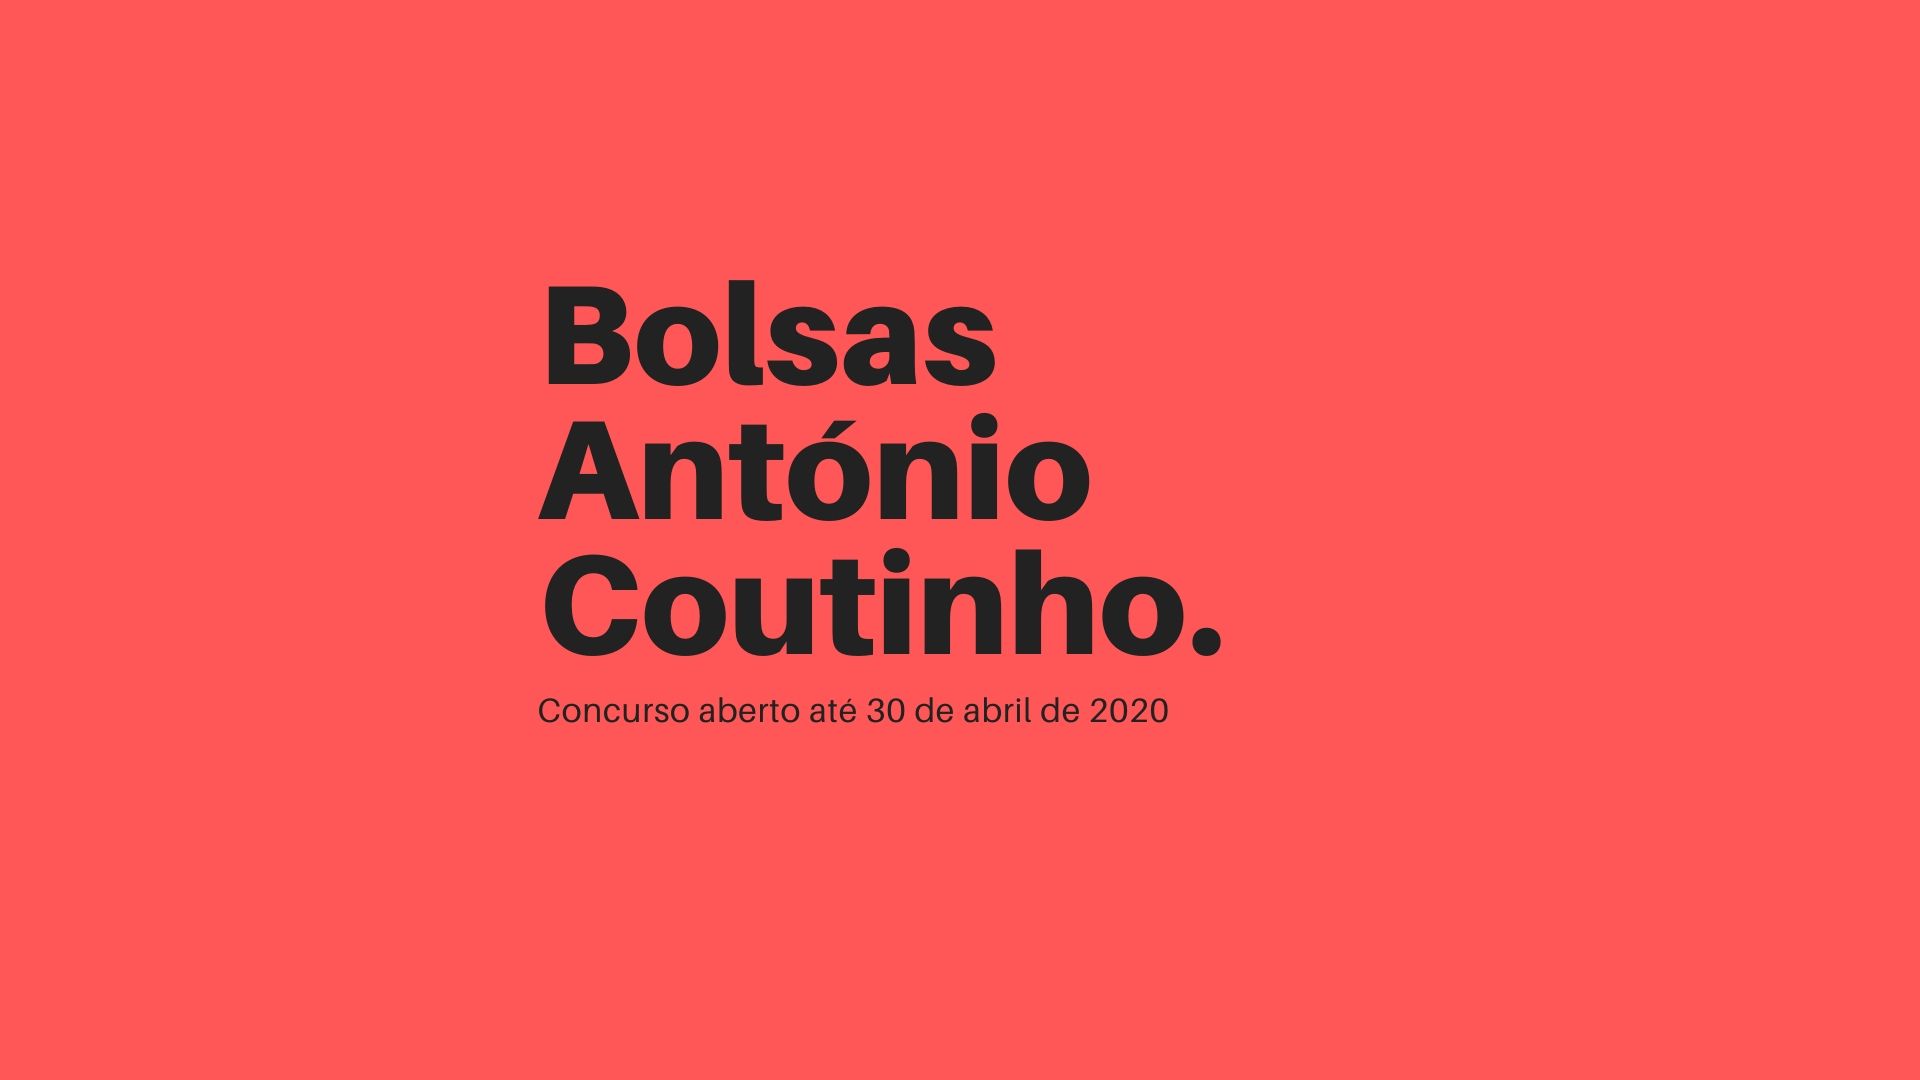 Candidaturas abertas para as Bolsas António Coutinho